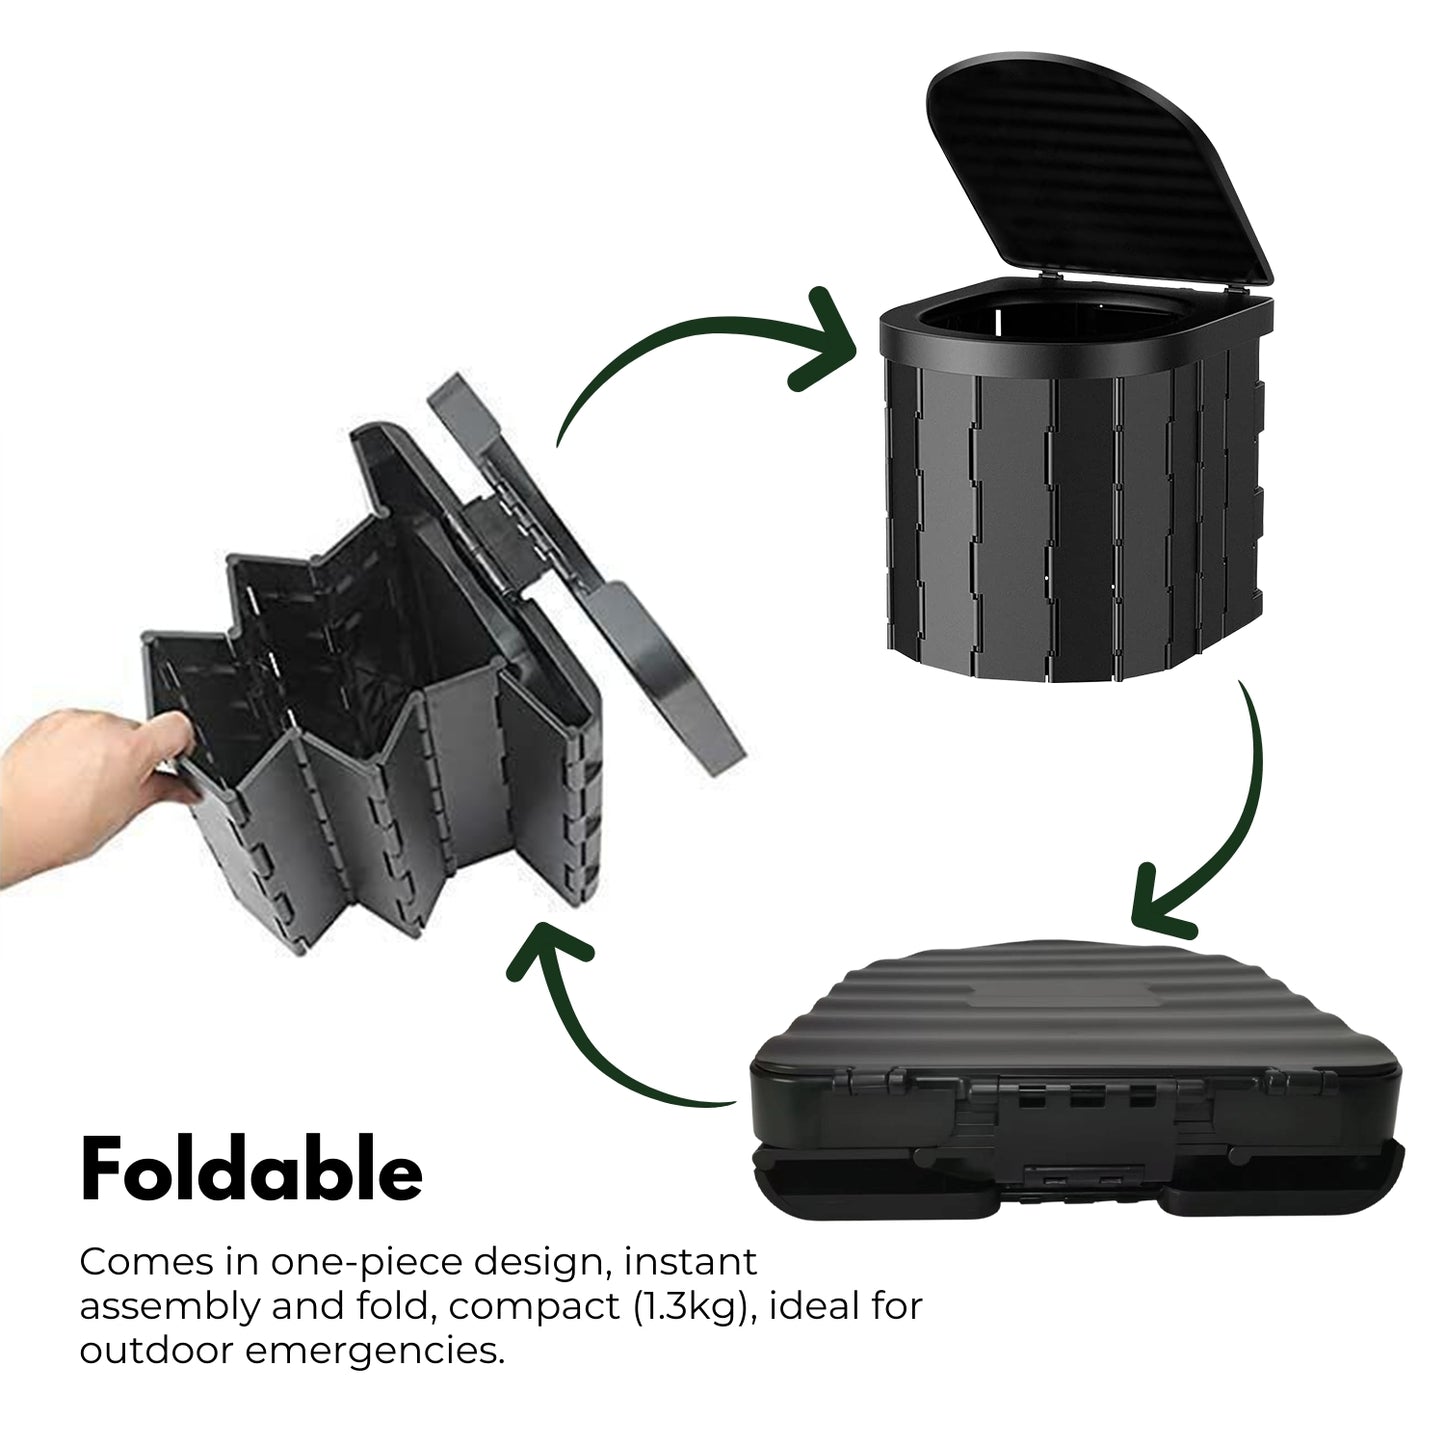 KILIROO Portable Foldable Potty With Lid (Black)